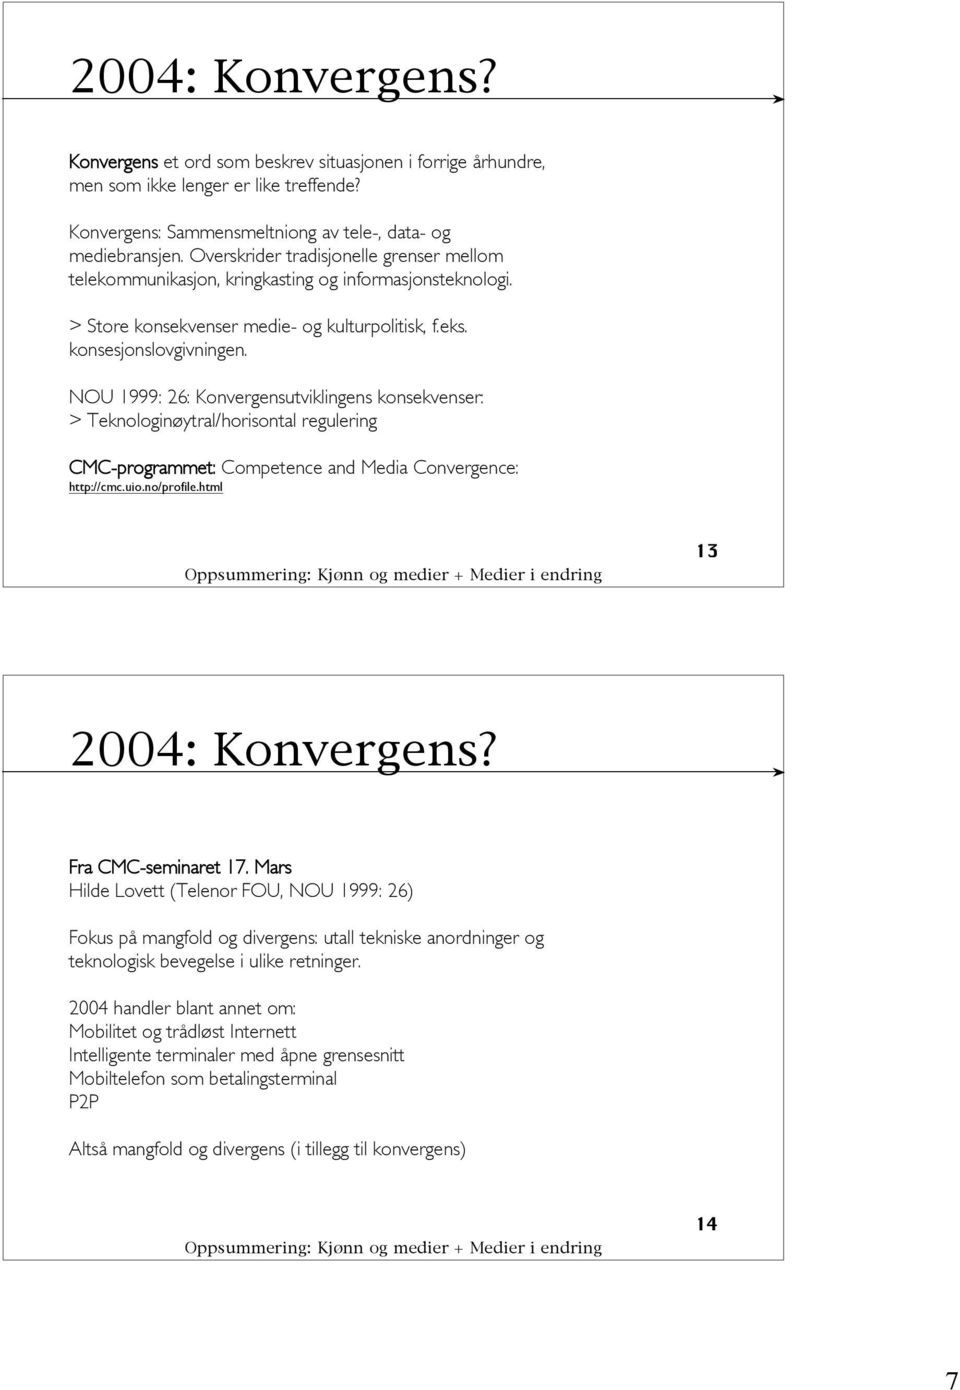 NOU 1999: 26: Konvergensutviklingens konsekvenser: > Teknologinøytral/horisontal regulering CMC-programmet: Competence and Media Convergence: http://cmc.uio.no/profile.html 13 2004: Konvergens?